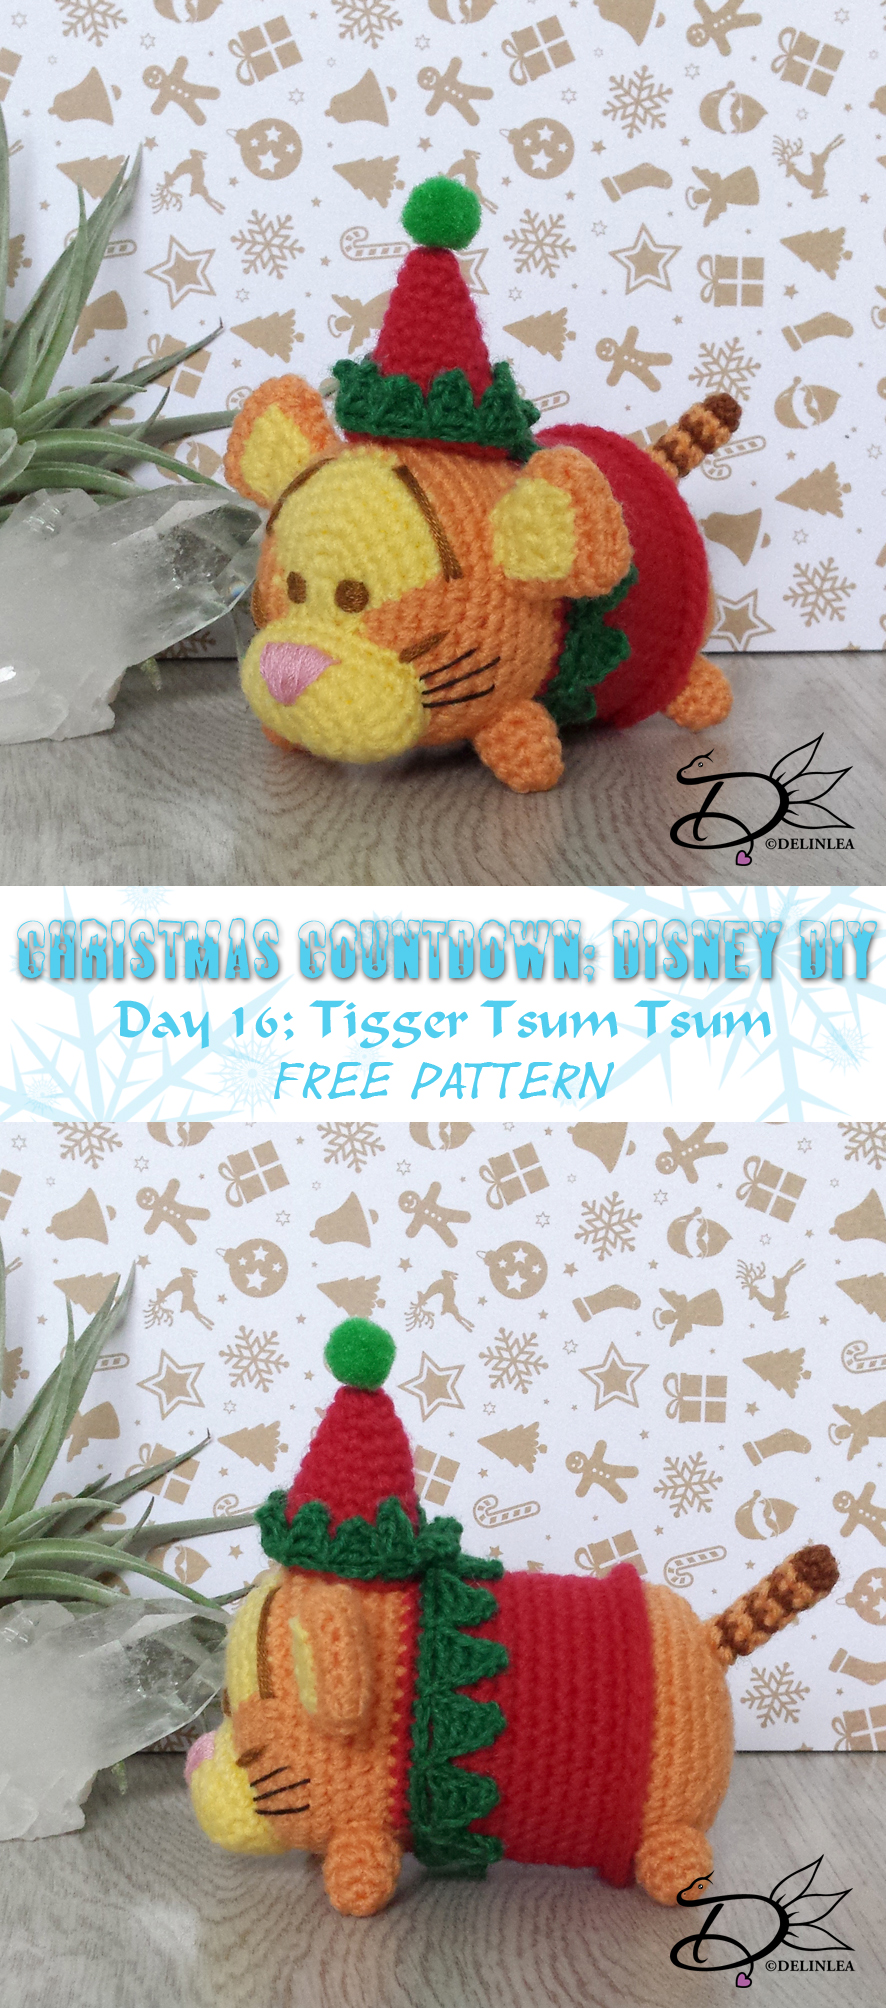 Amigurumi Christmas Crochet Books: 16 Easy and Cute Crochet Patterns